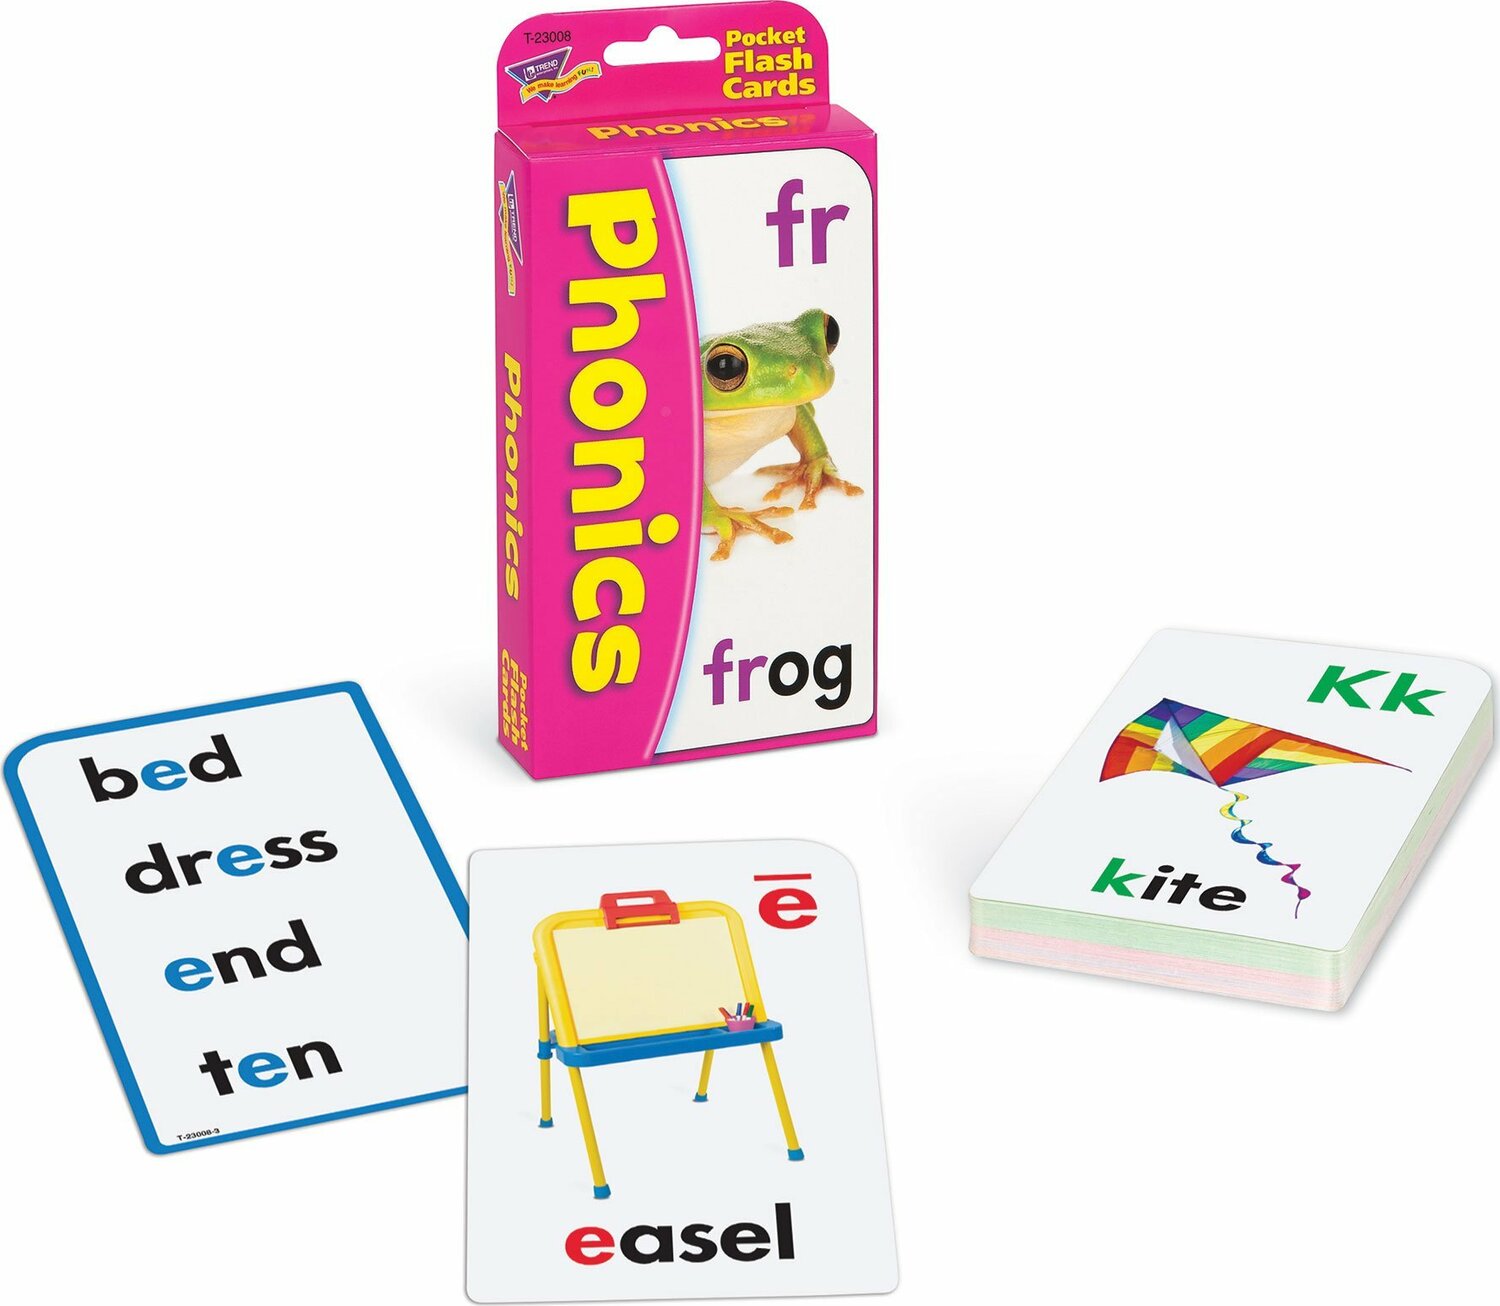 Phonics Pocket Flash Cards from Trend Enterprises - School Crossing